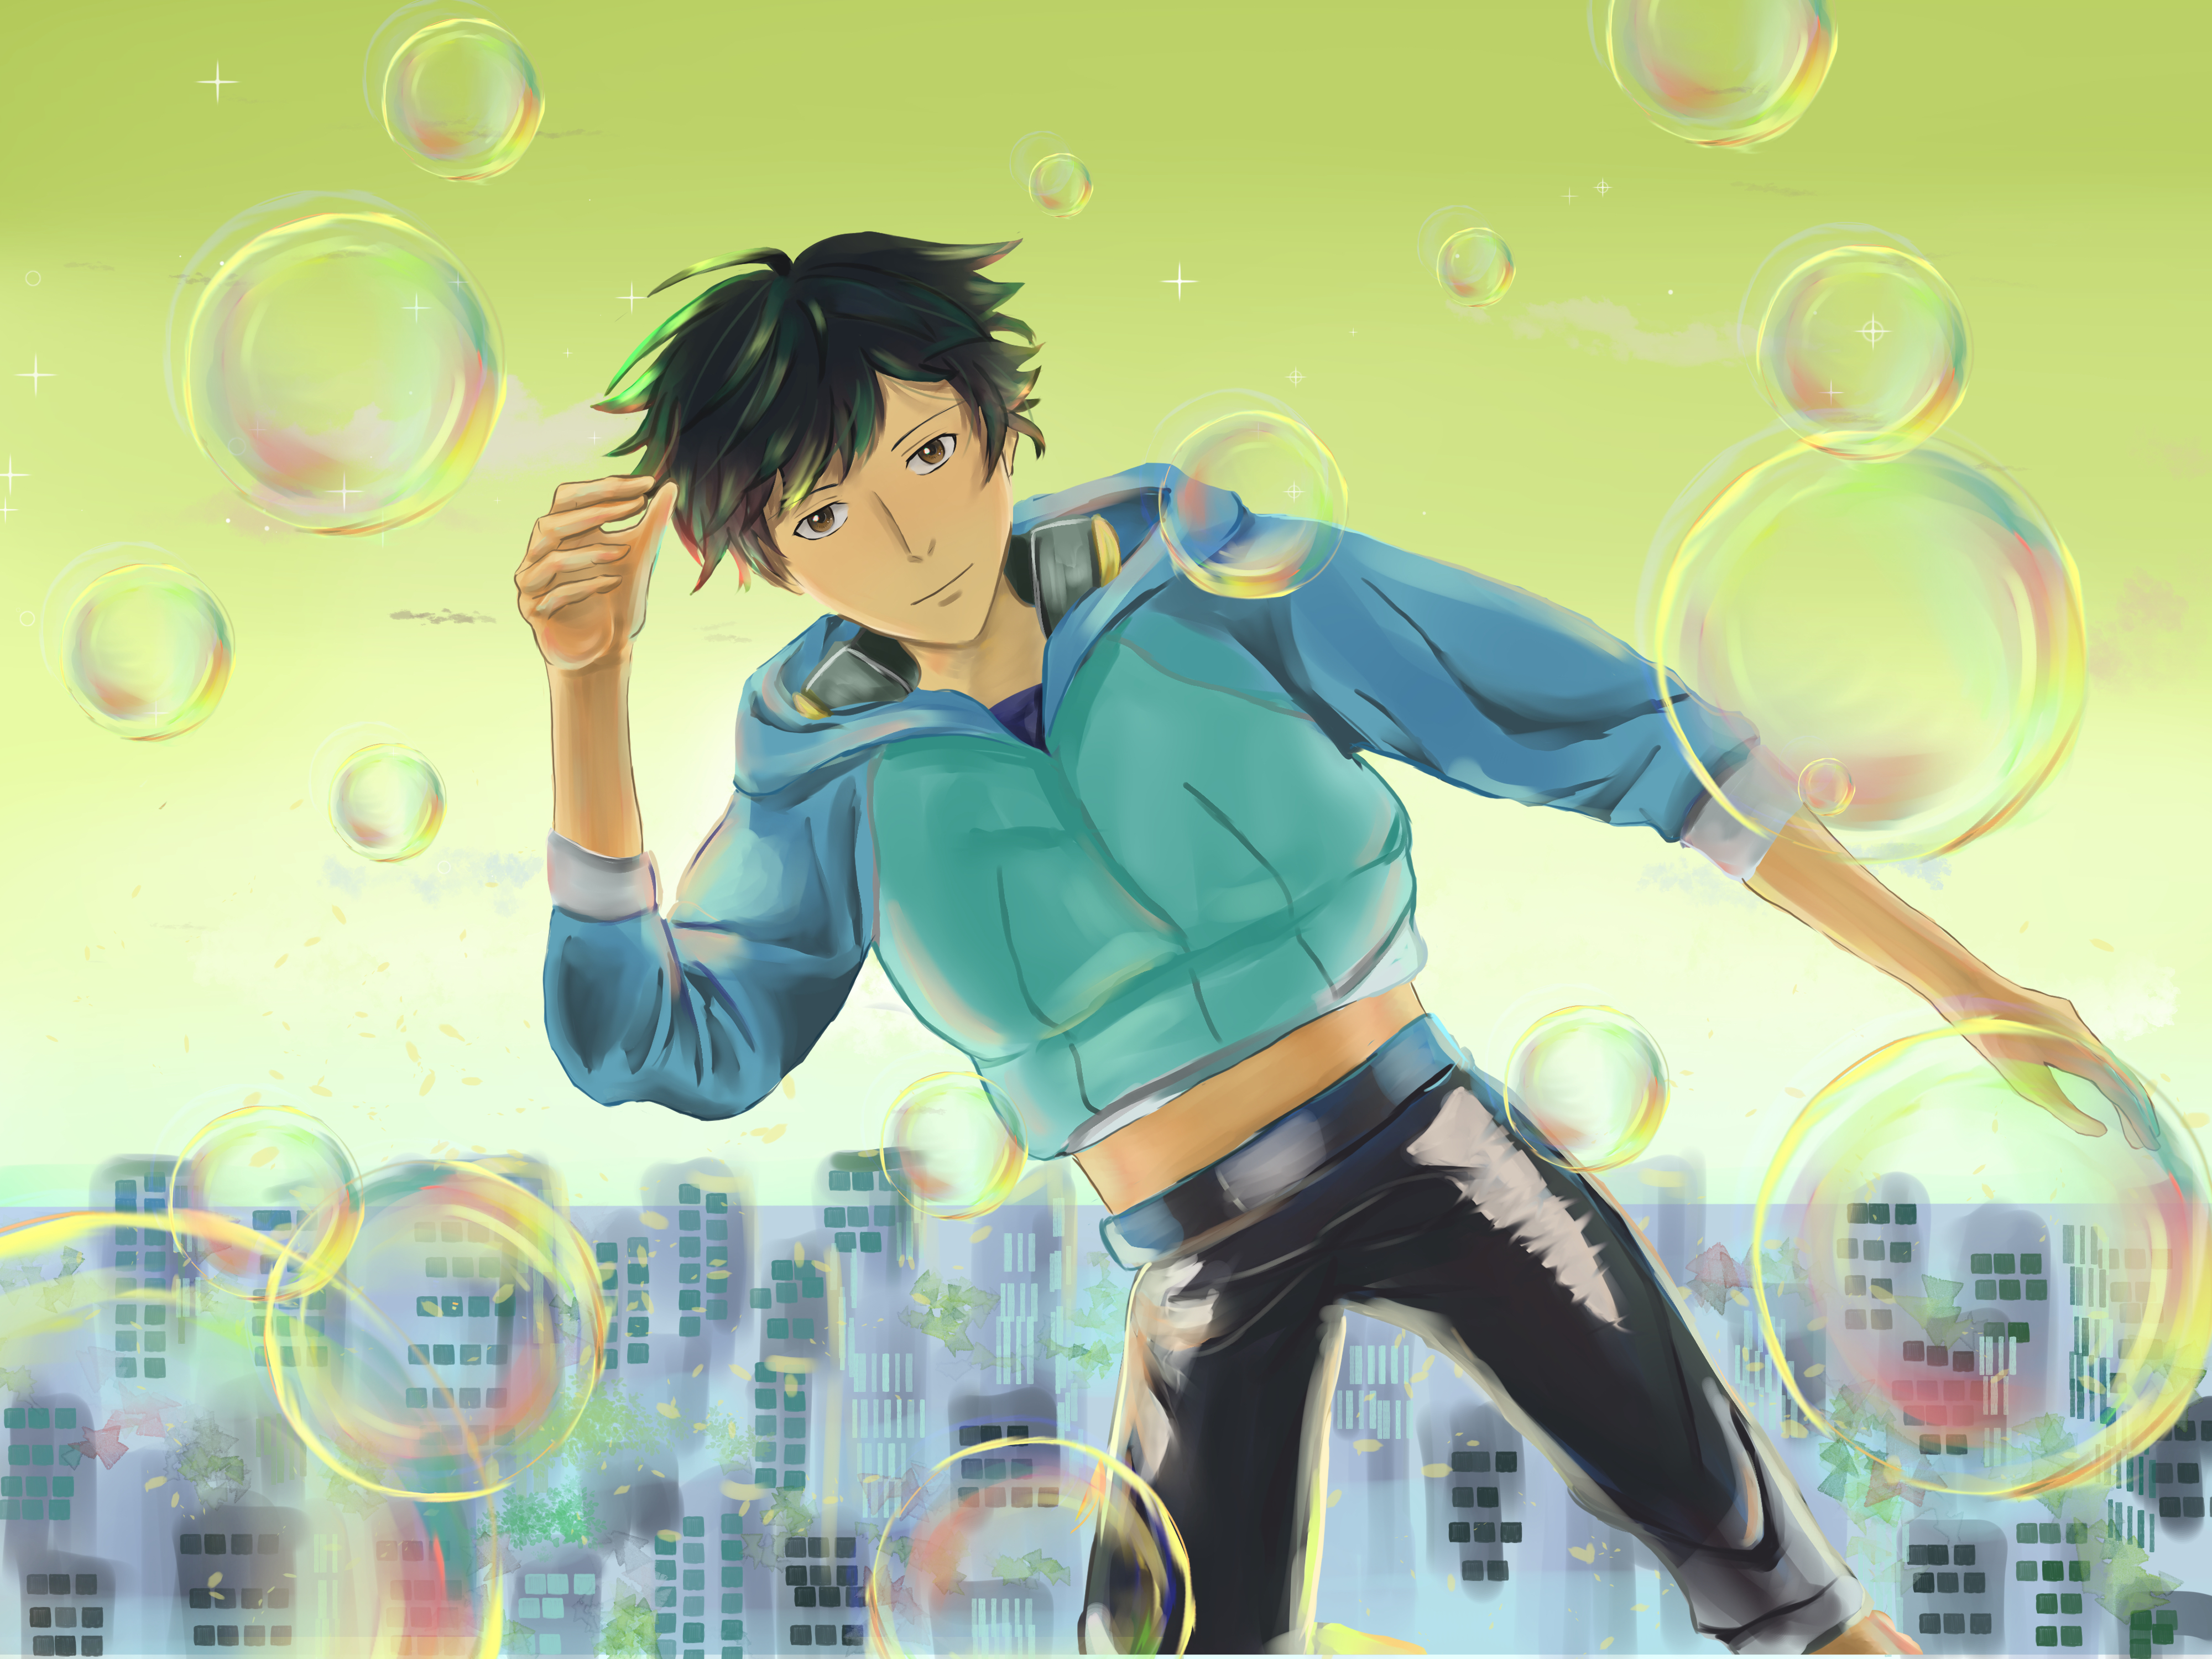 steep-mallard91: girl cute anime bubbles hearts happy spacesuit leaping  rainbow